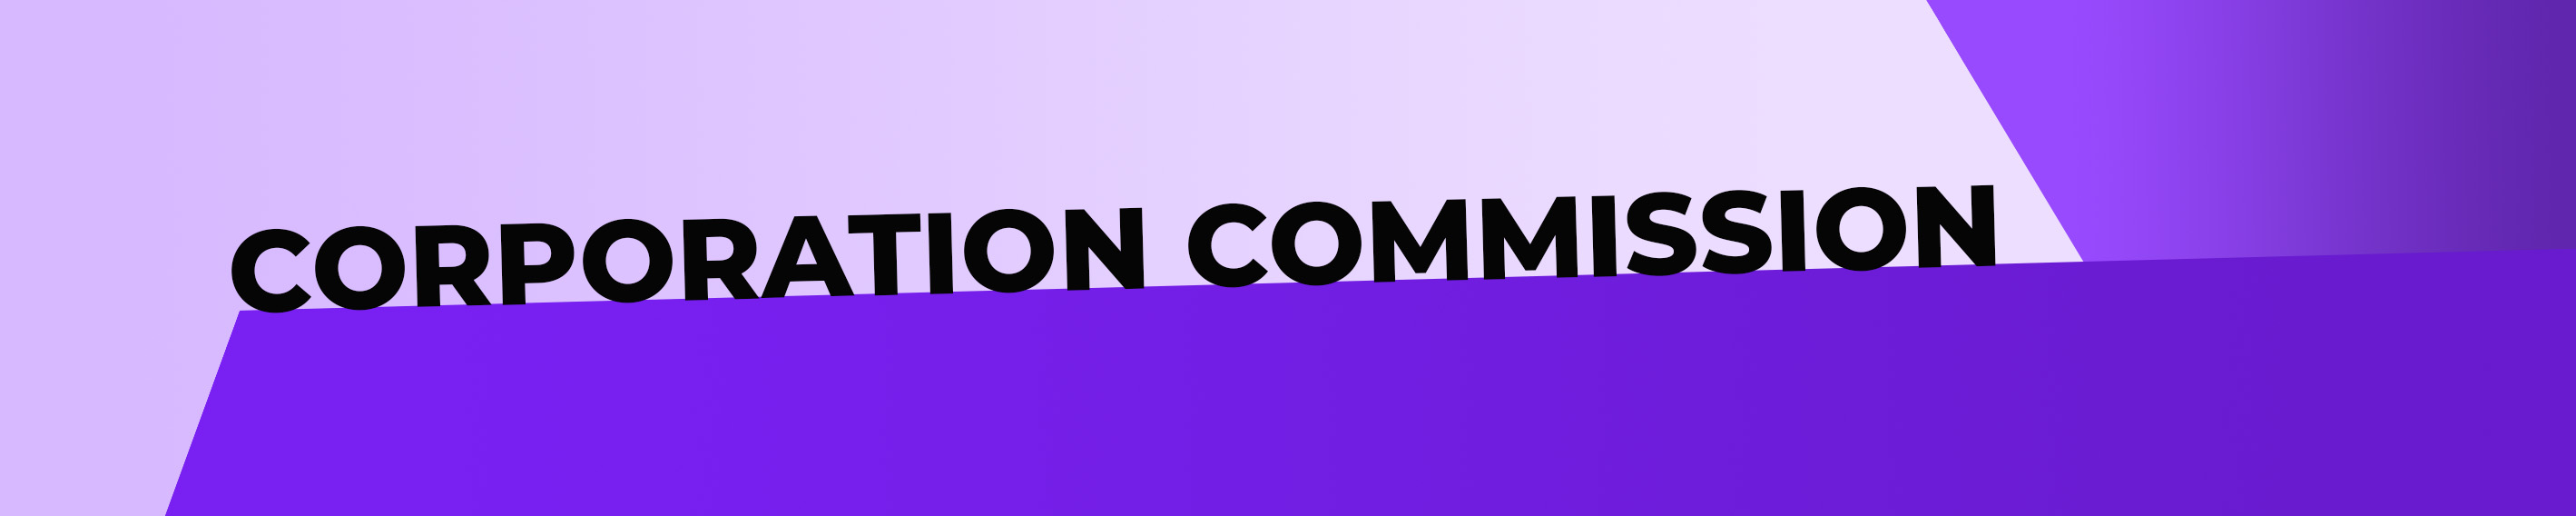 Arizona Corporation Commission